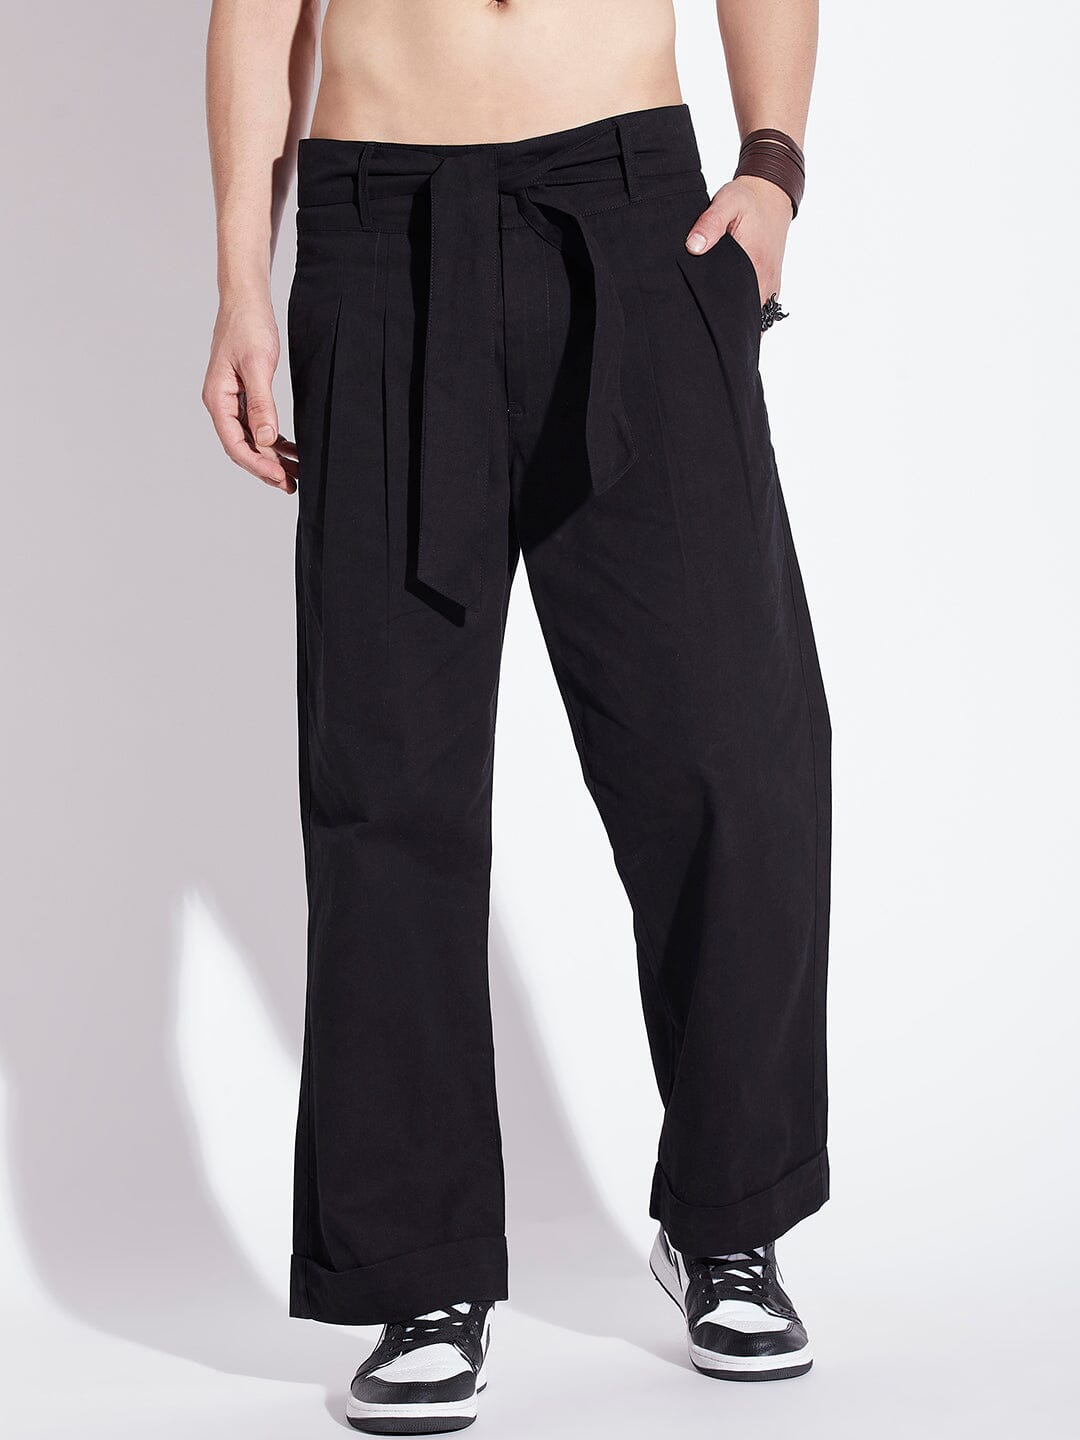 Buy MyMei Men's Cargo Pants Multi-Pockets Baggy Trousers Military Style  Bottom Wear Khaki at Amazon.in